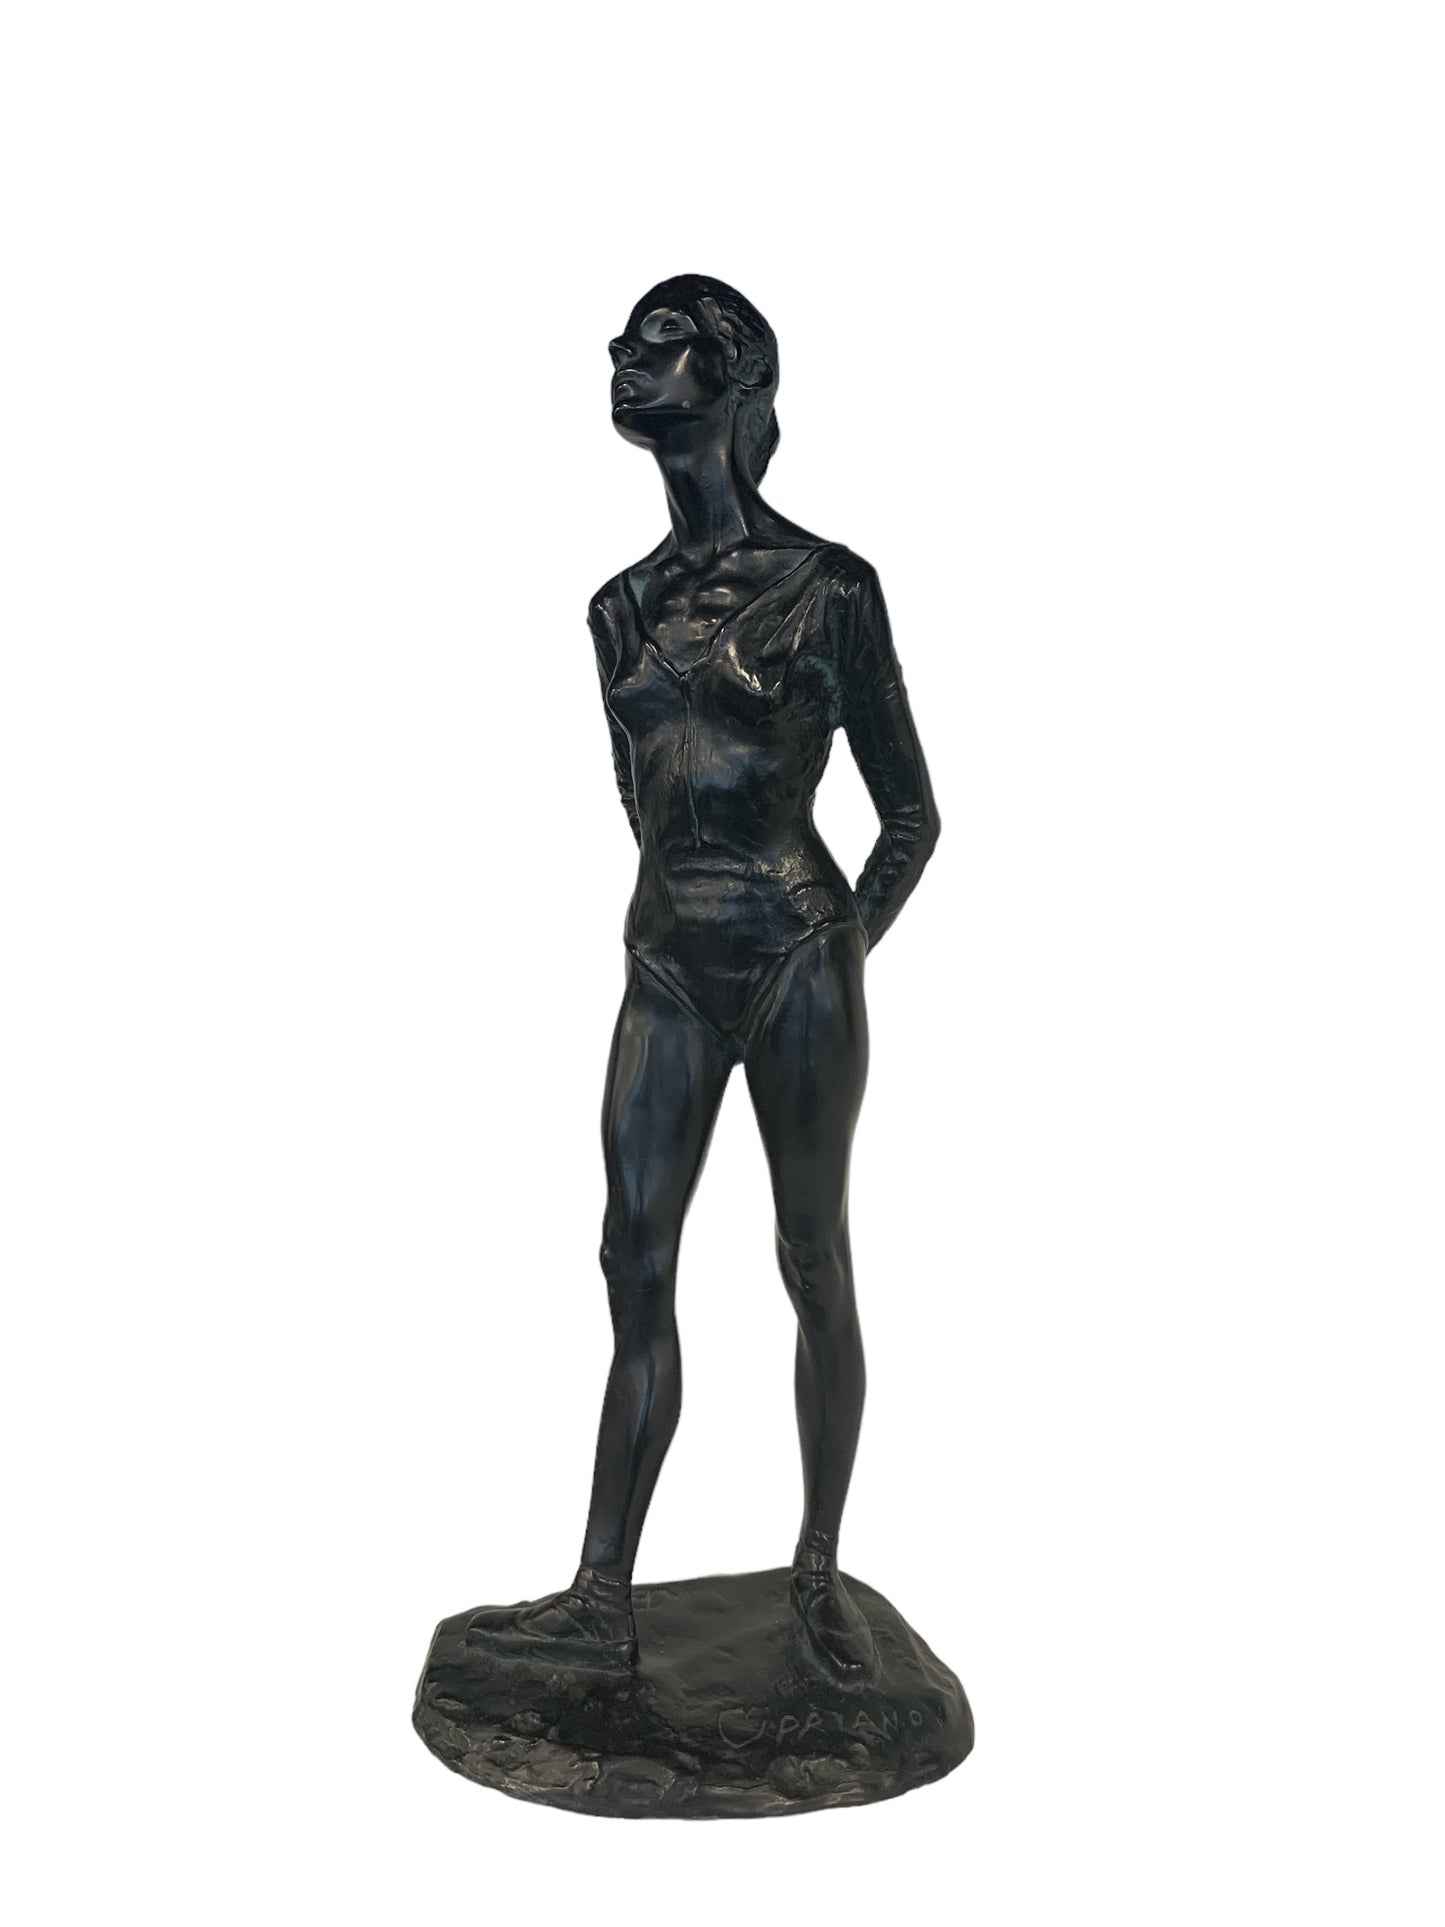 Anthony Cipriano ballerina figurine, 13.75" h